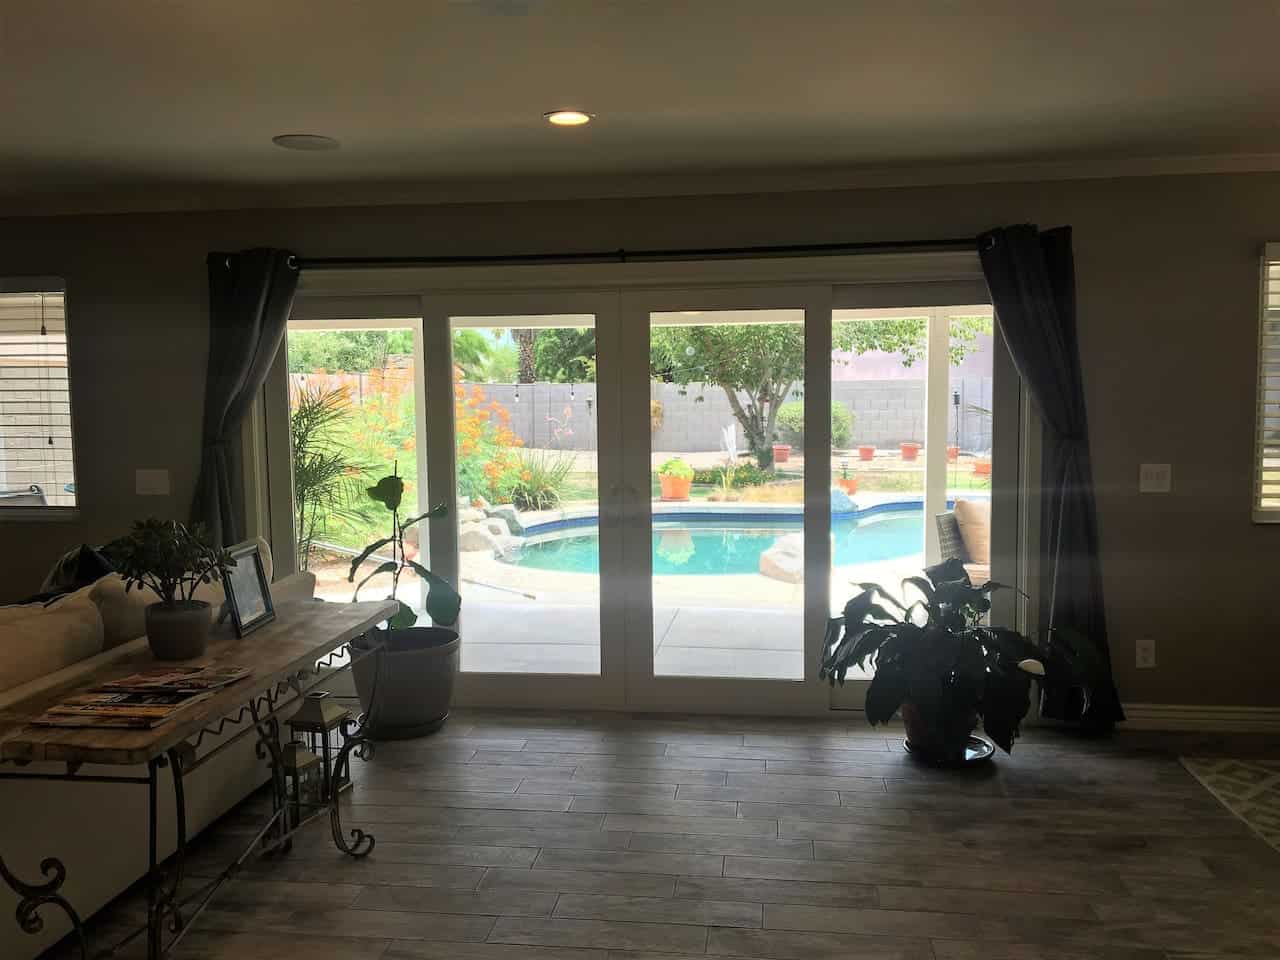 Image of Airbnb rental in Scottsdale Arizona